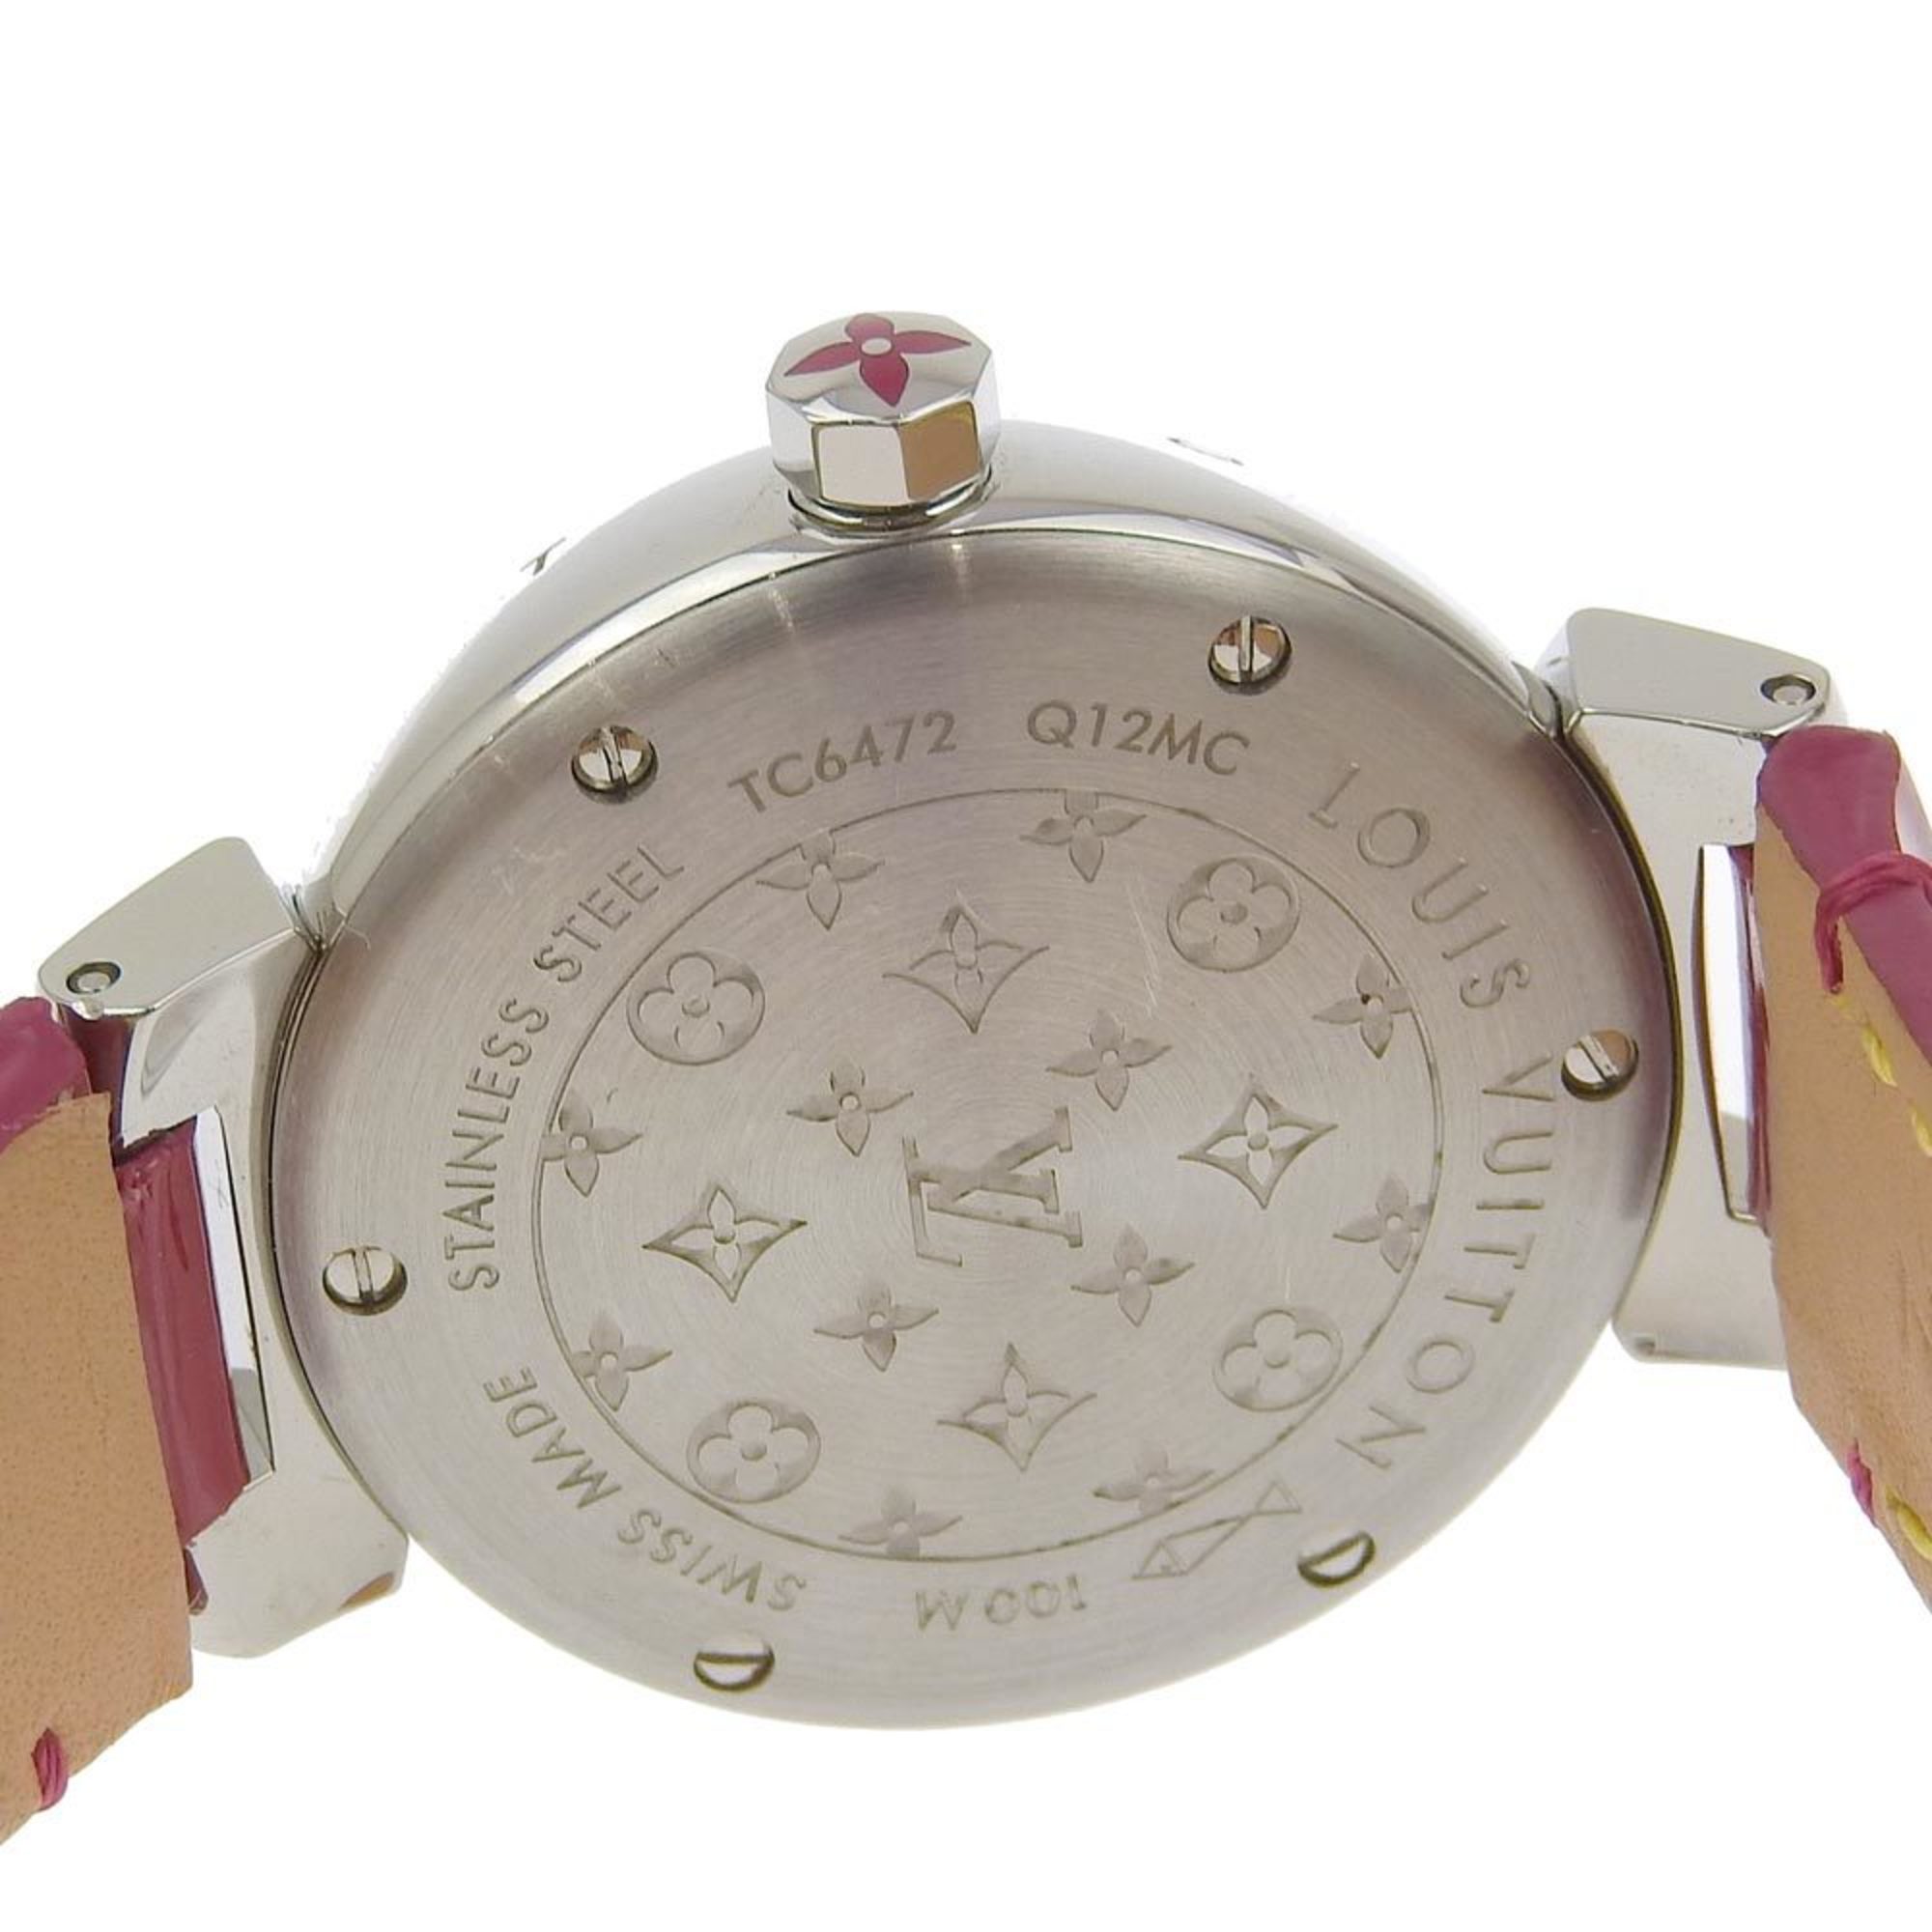 LOUIS VUITTON Tambour Watch 10P Diamond Q12MC Stainless Steel x Leather Quartz Analog Display Red Dial Women's I220823037